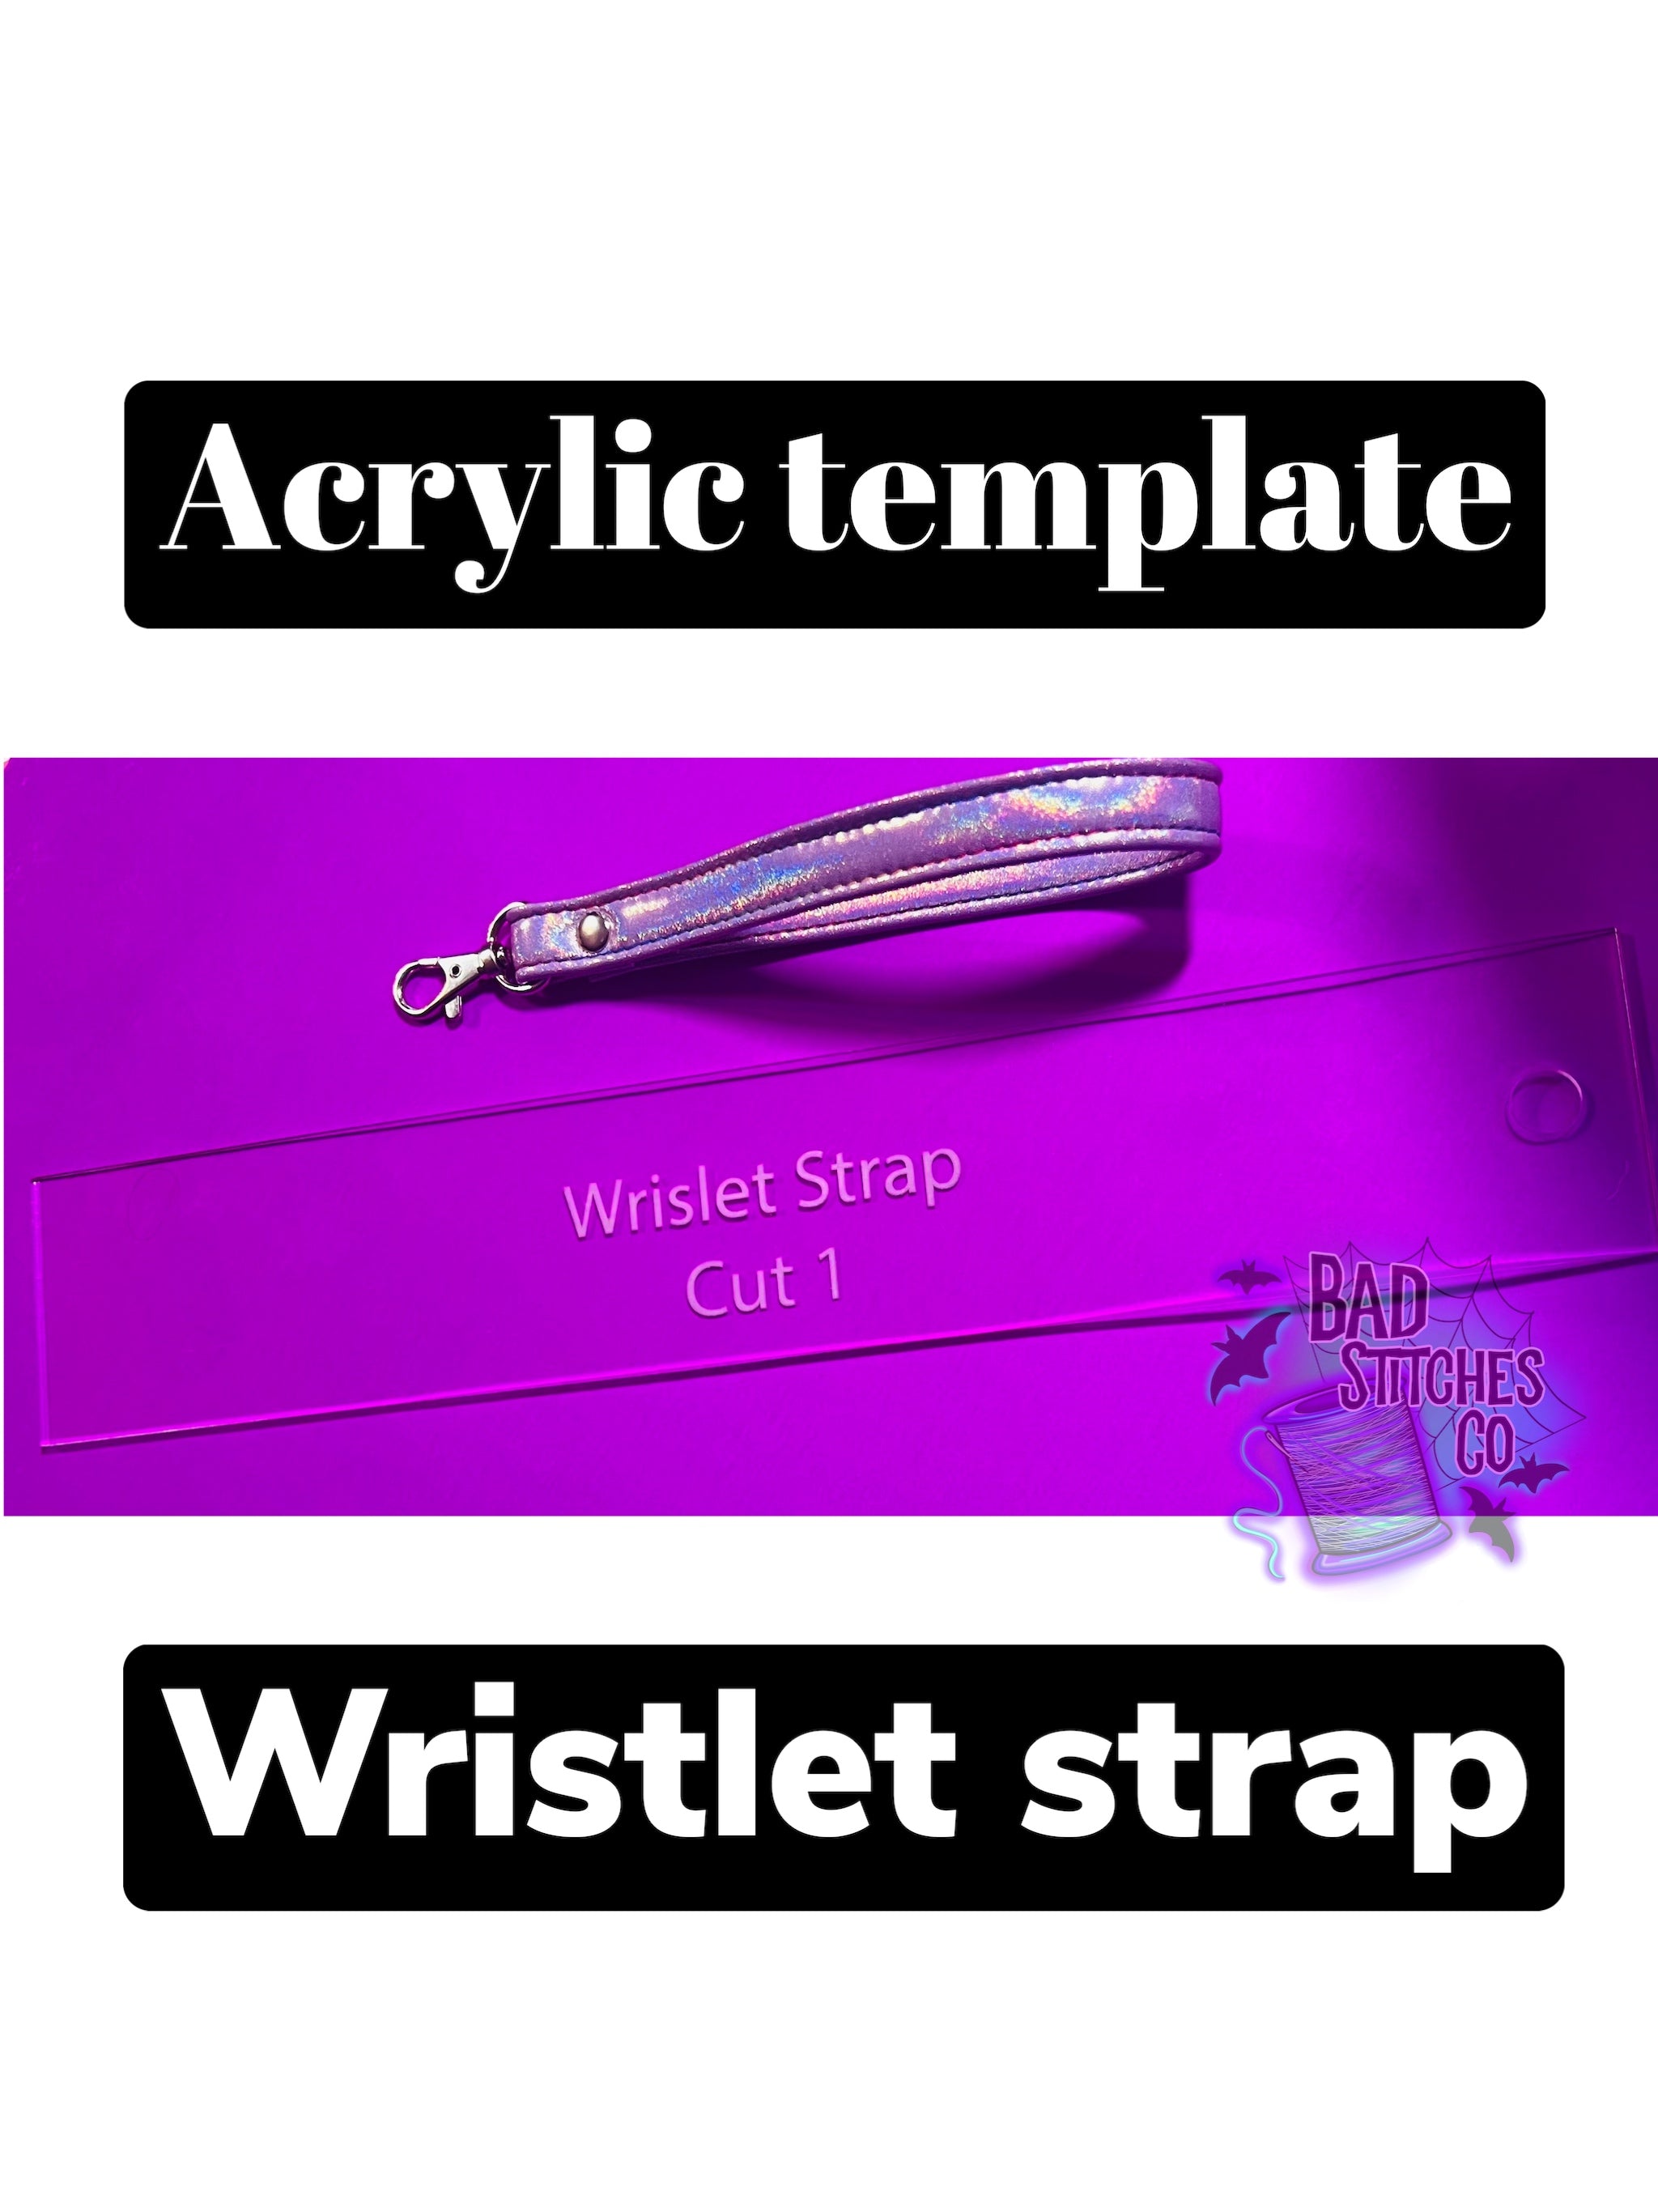 Acrylic wristlet template